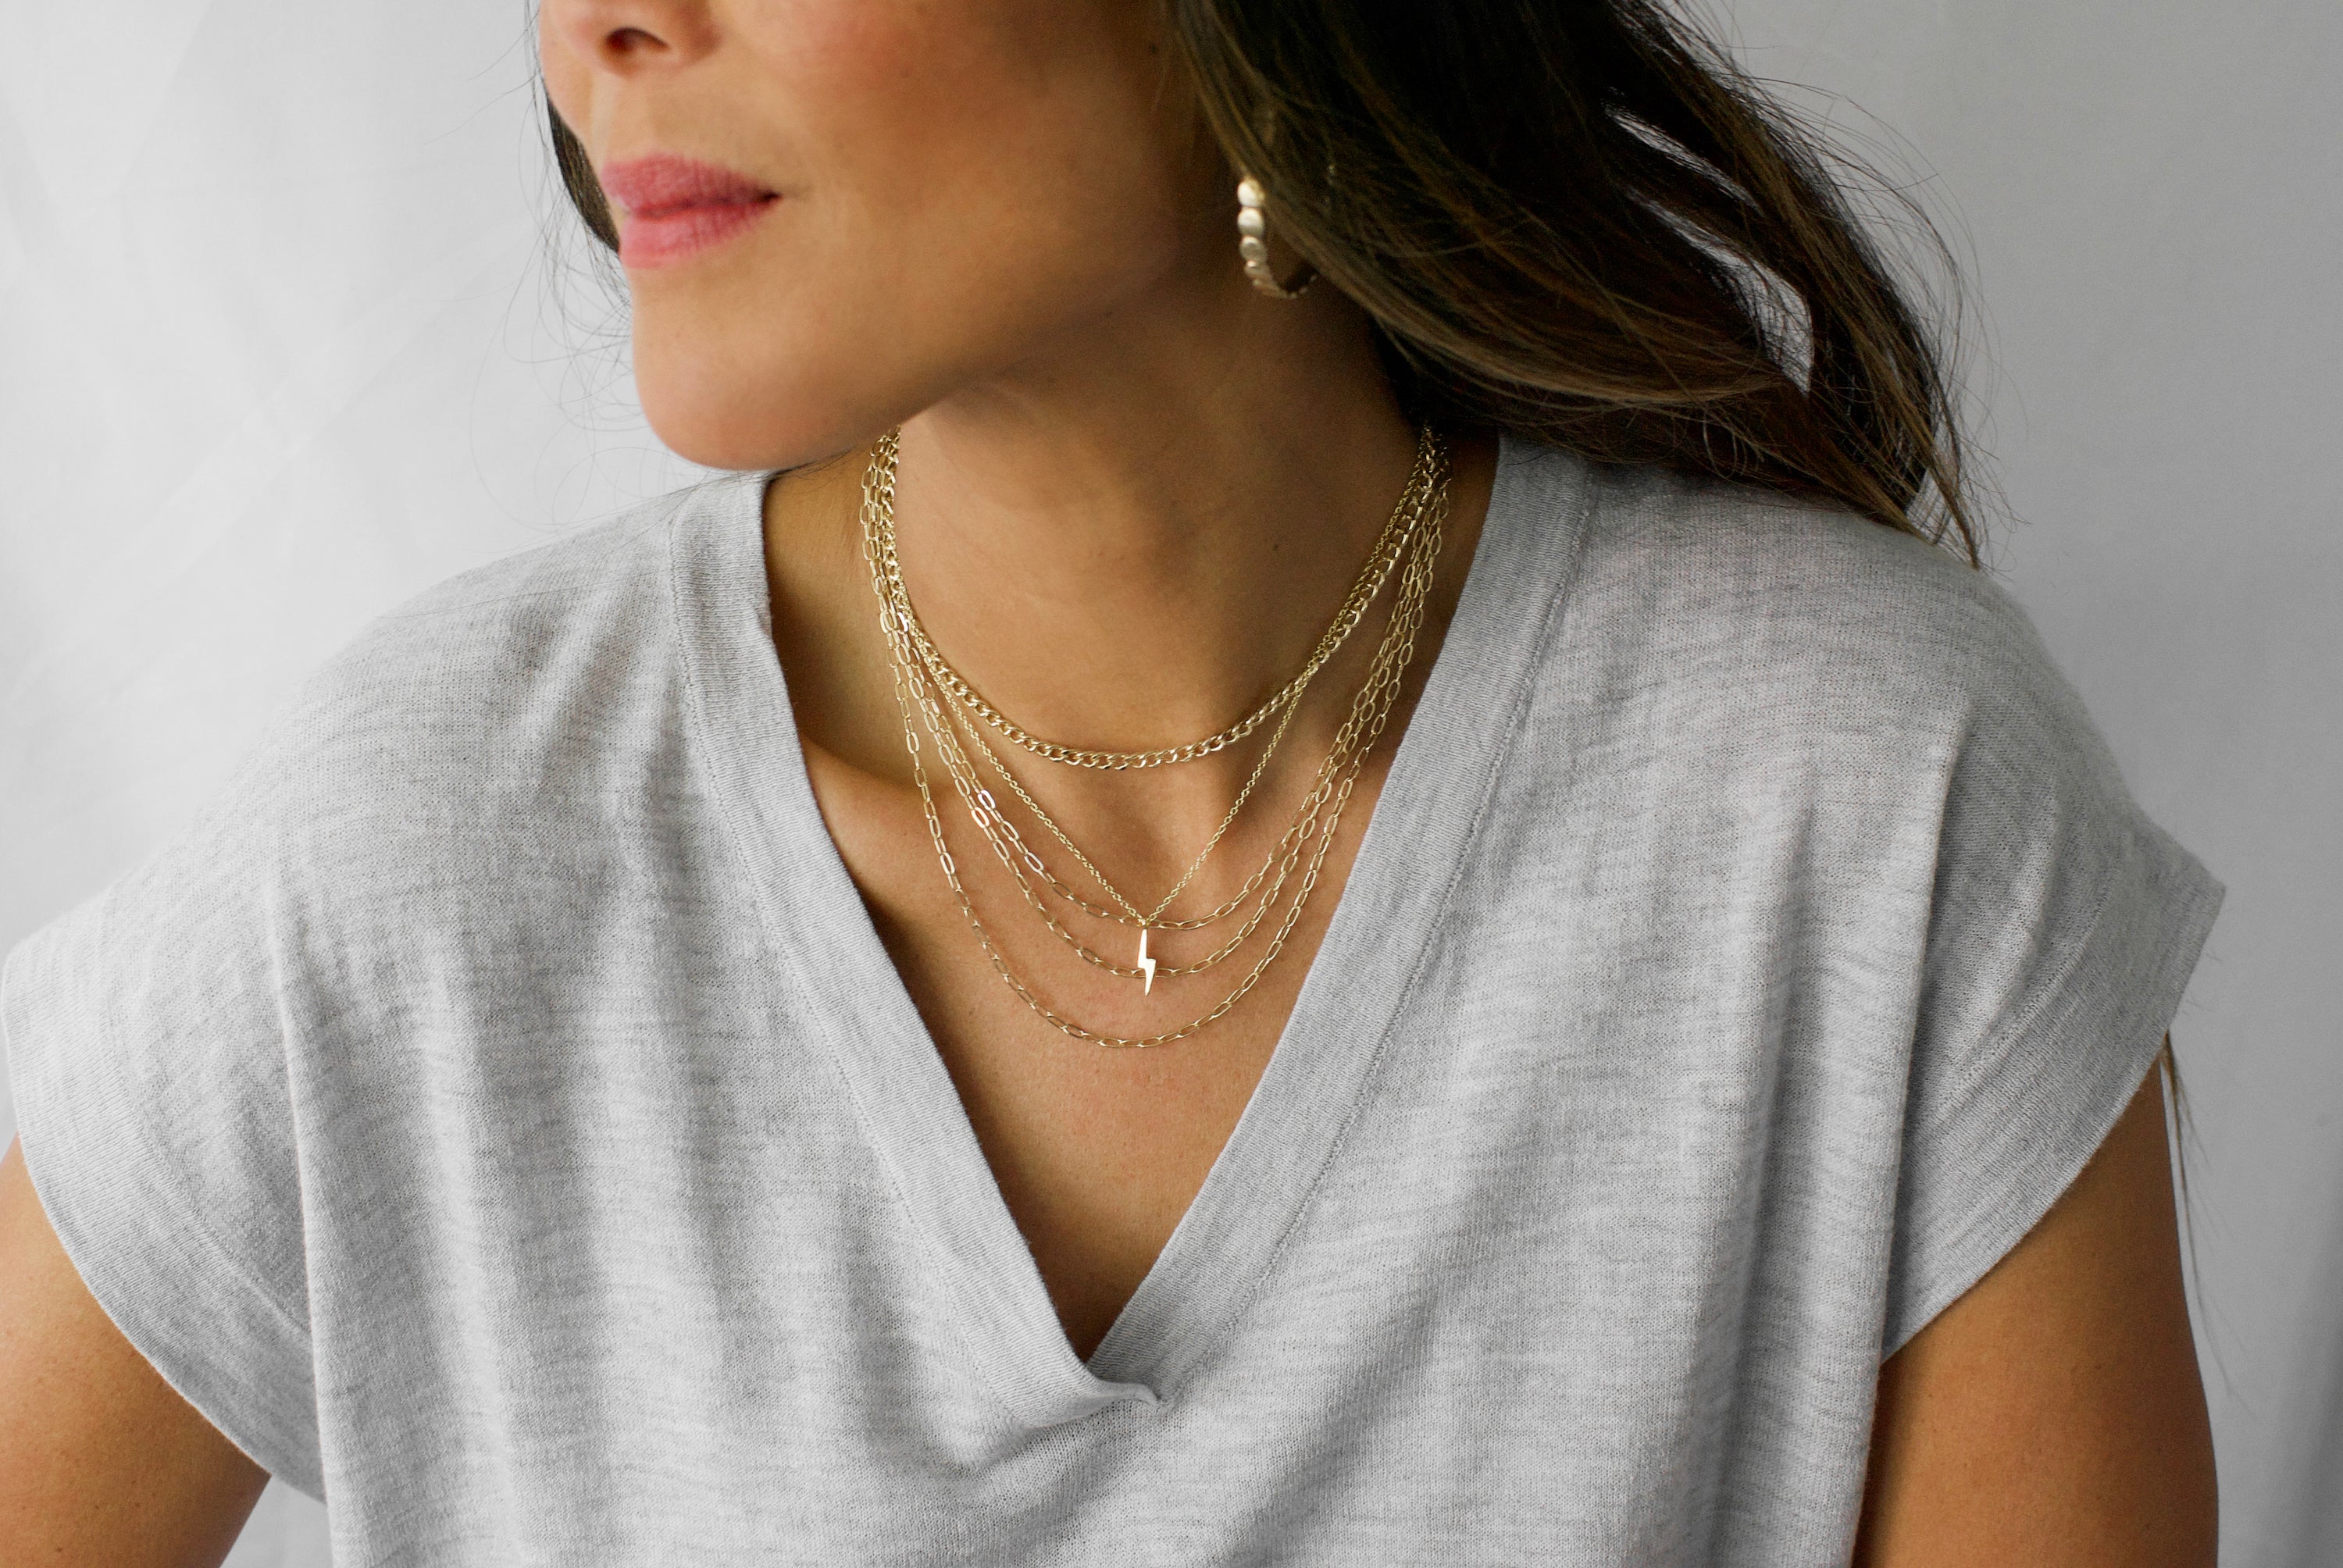 four-strand link necklace